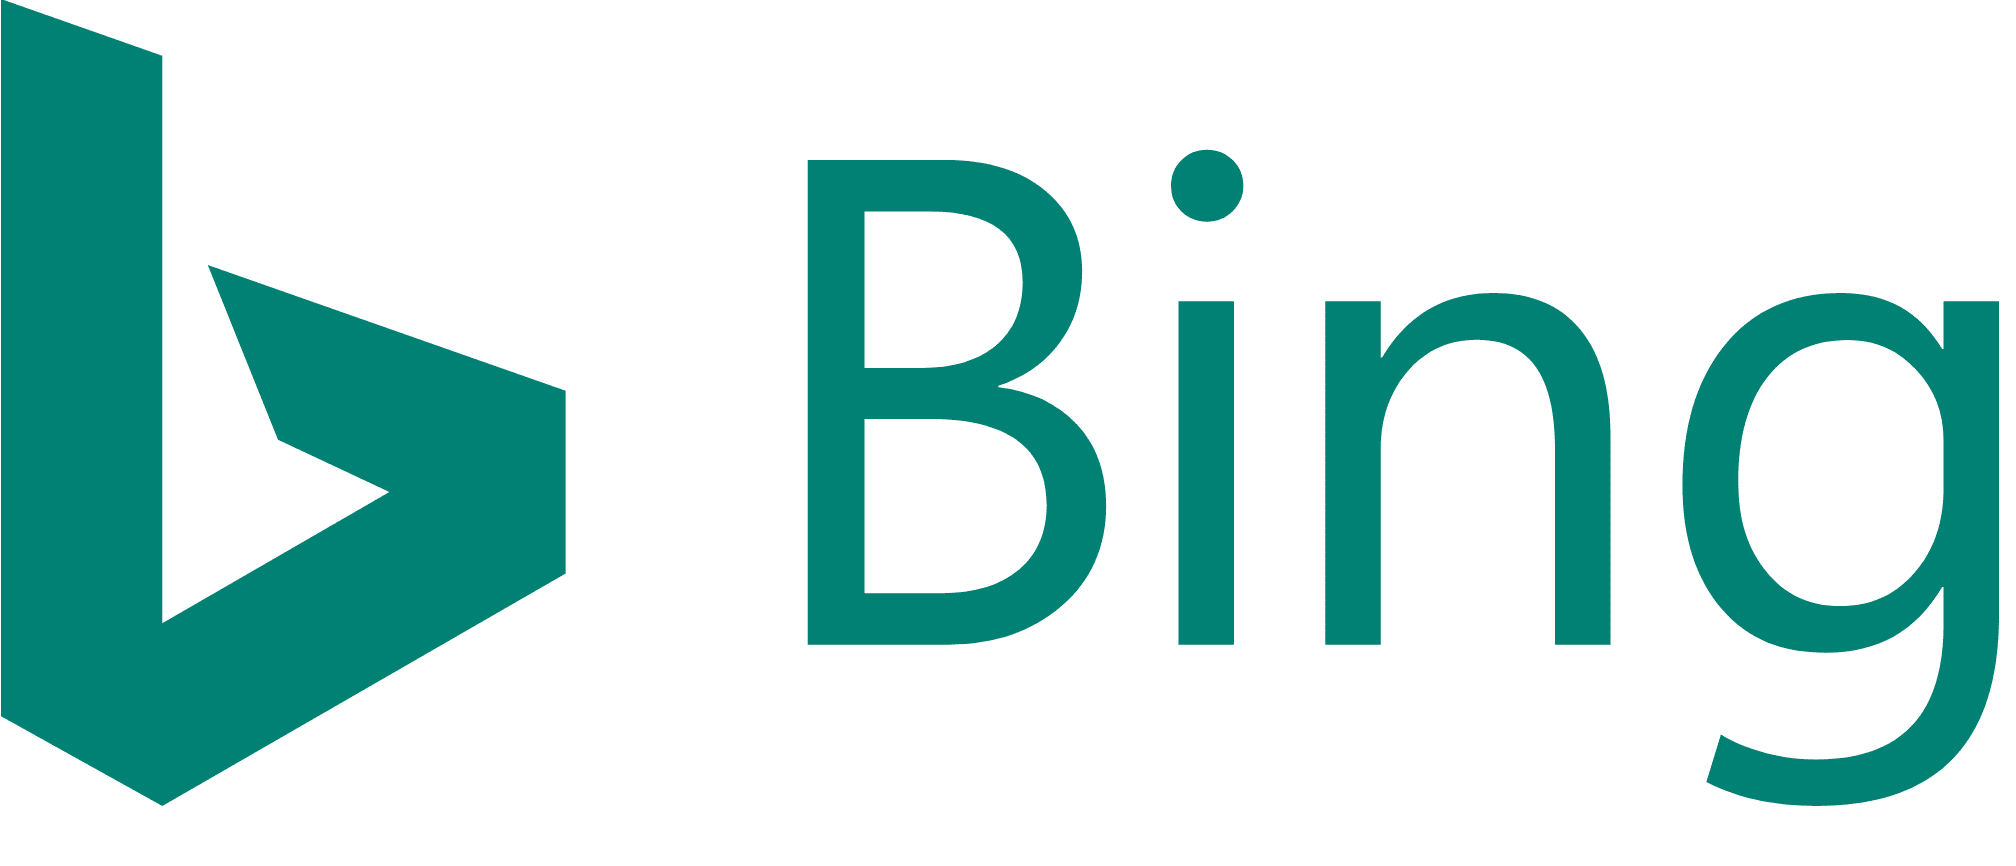 Bing imagine. Bing логотип. Бинг Поисковик. Майкрософт бинг. Логотип Bing на прозрачном фоне.